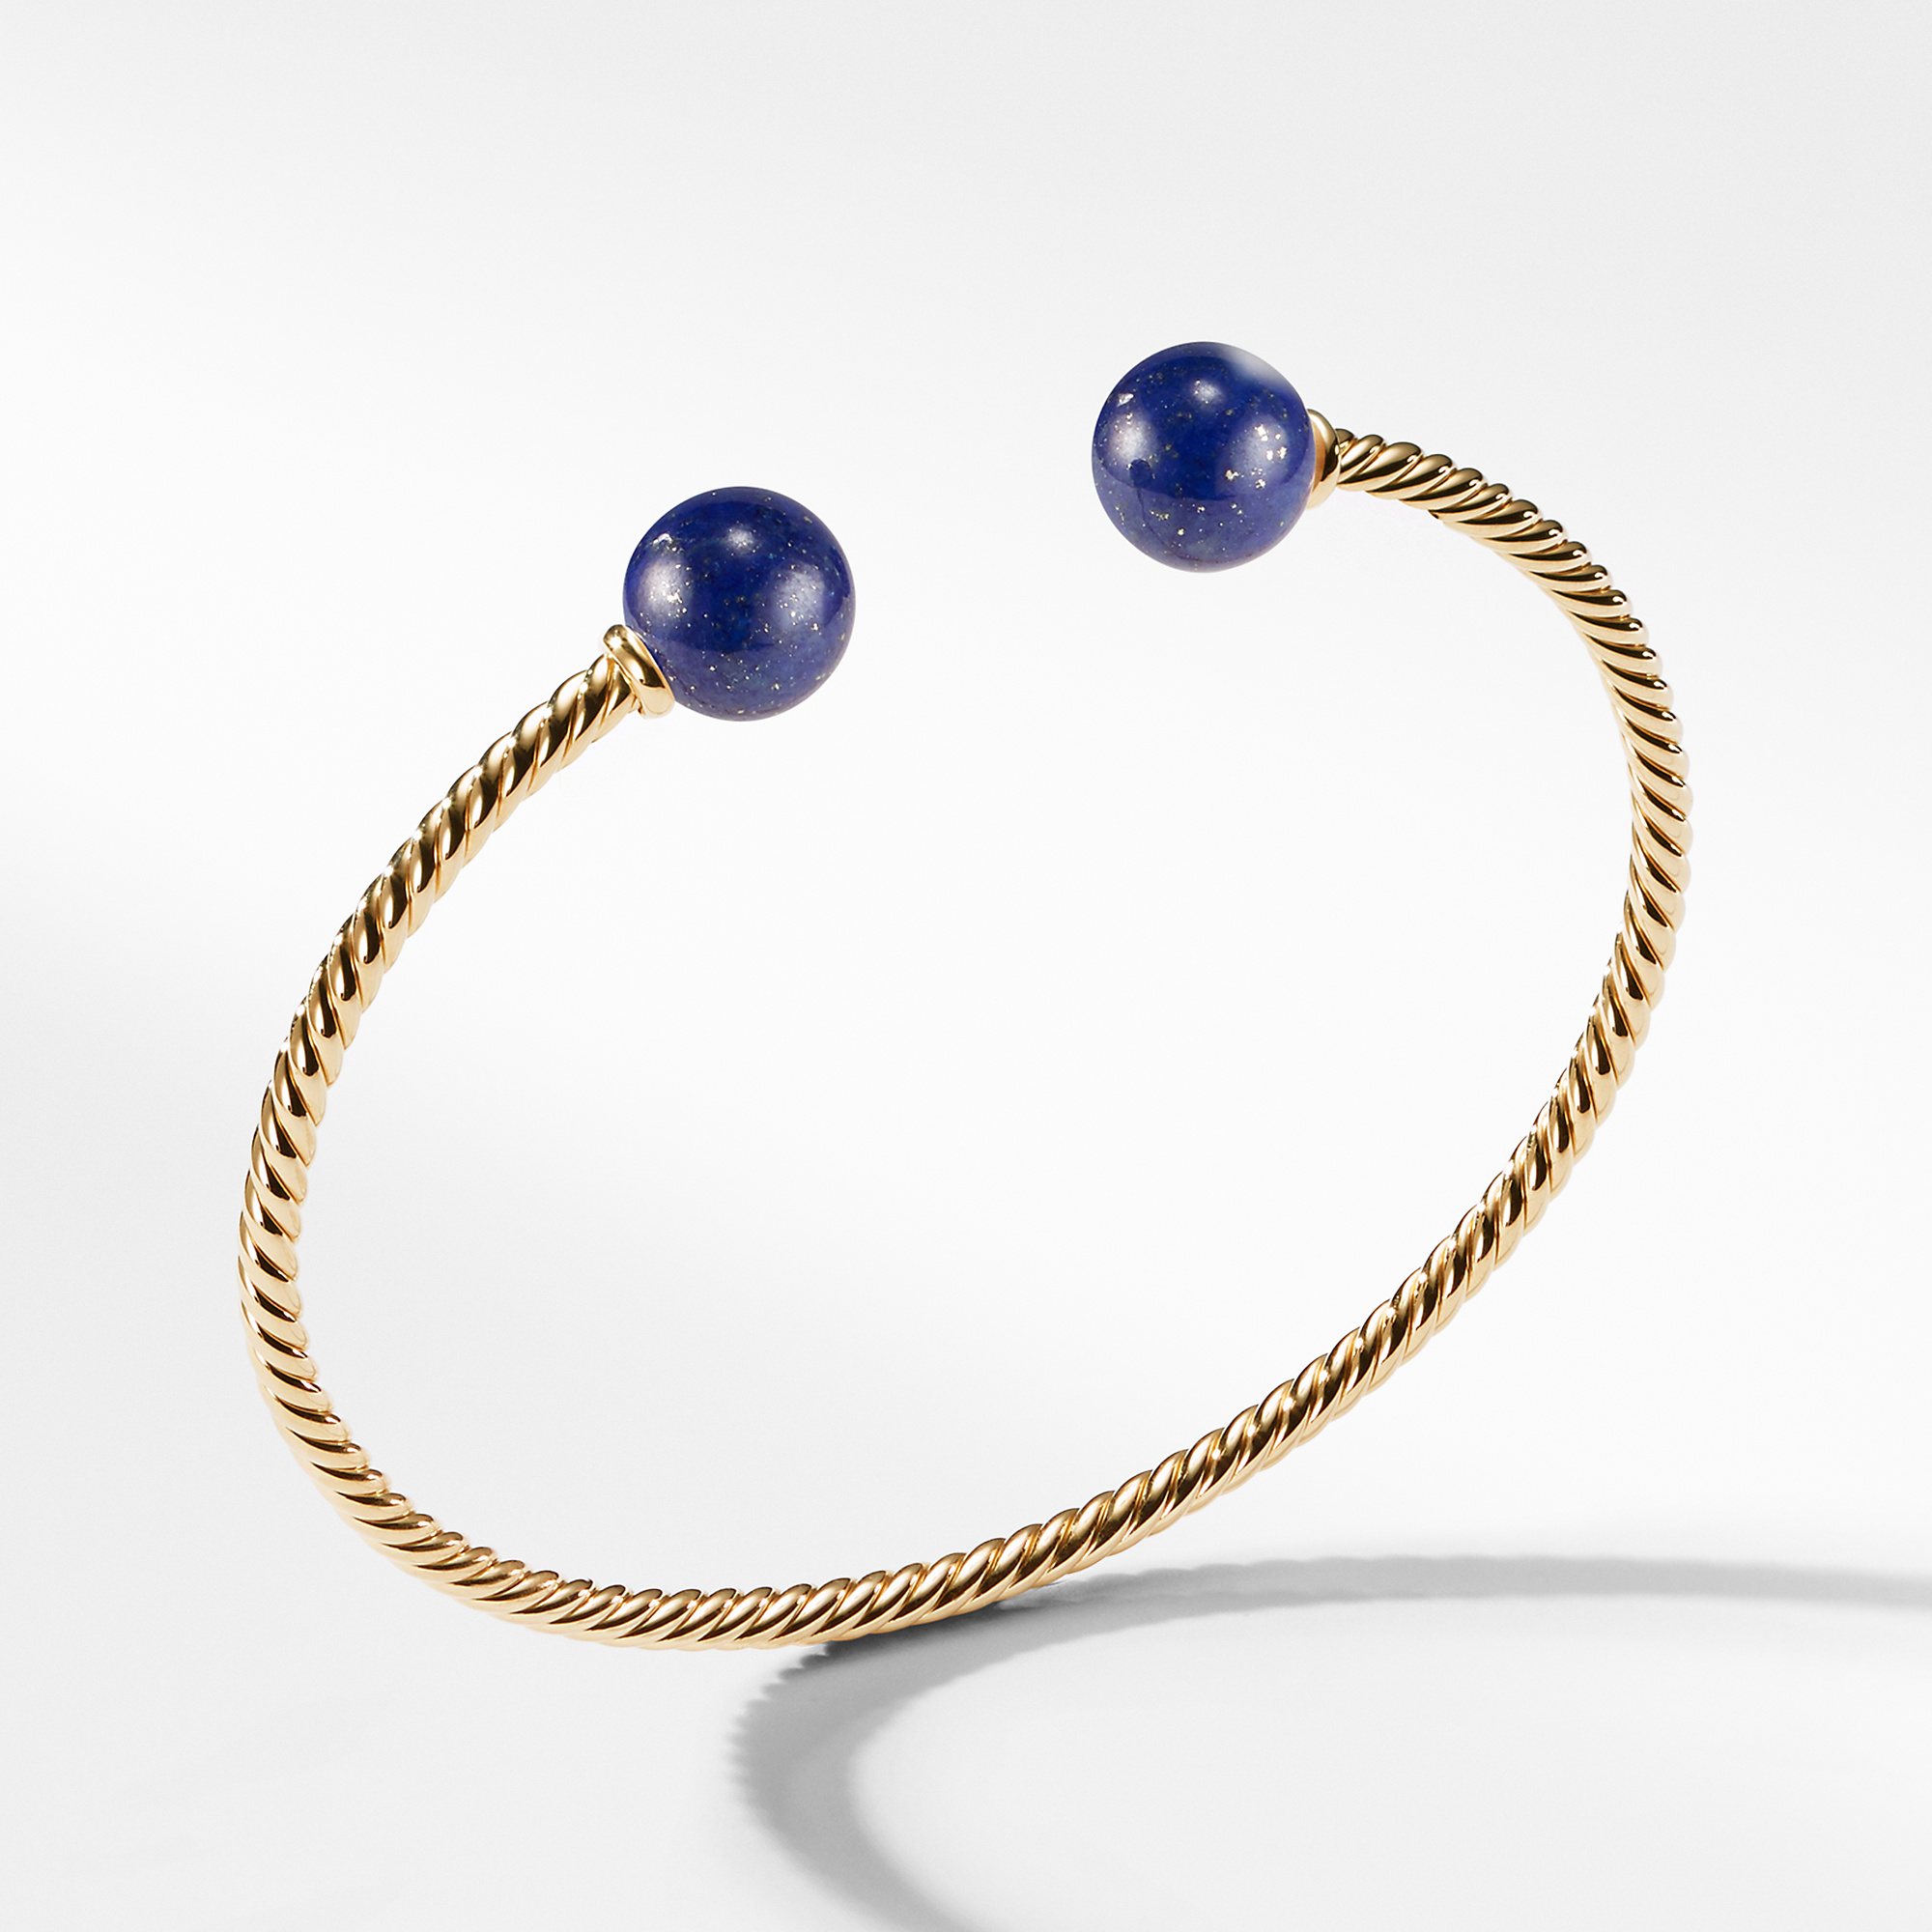 David Yurman Bead Bracelet with Lapis Lazuli in 18K Gold 0